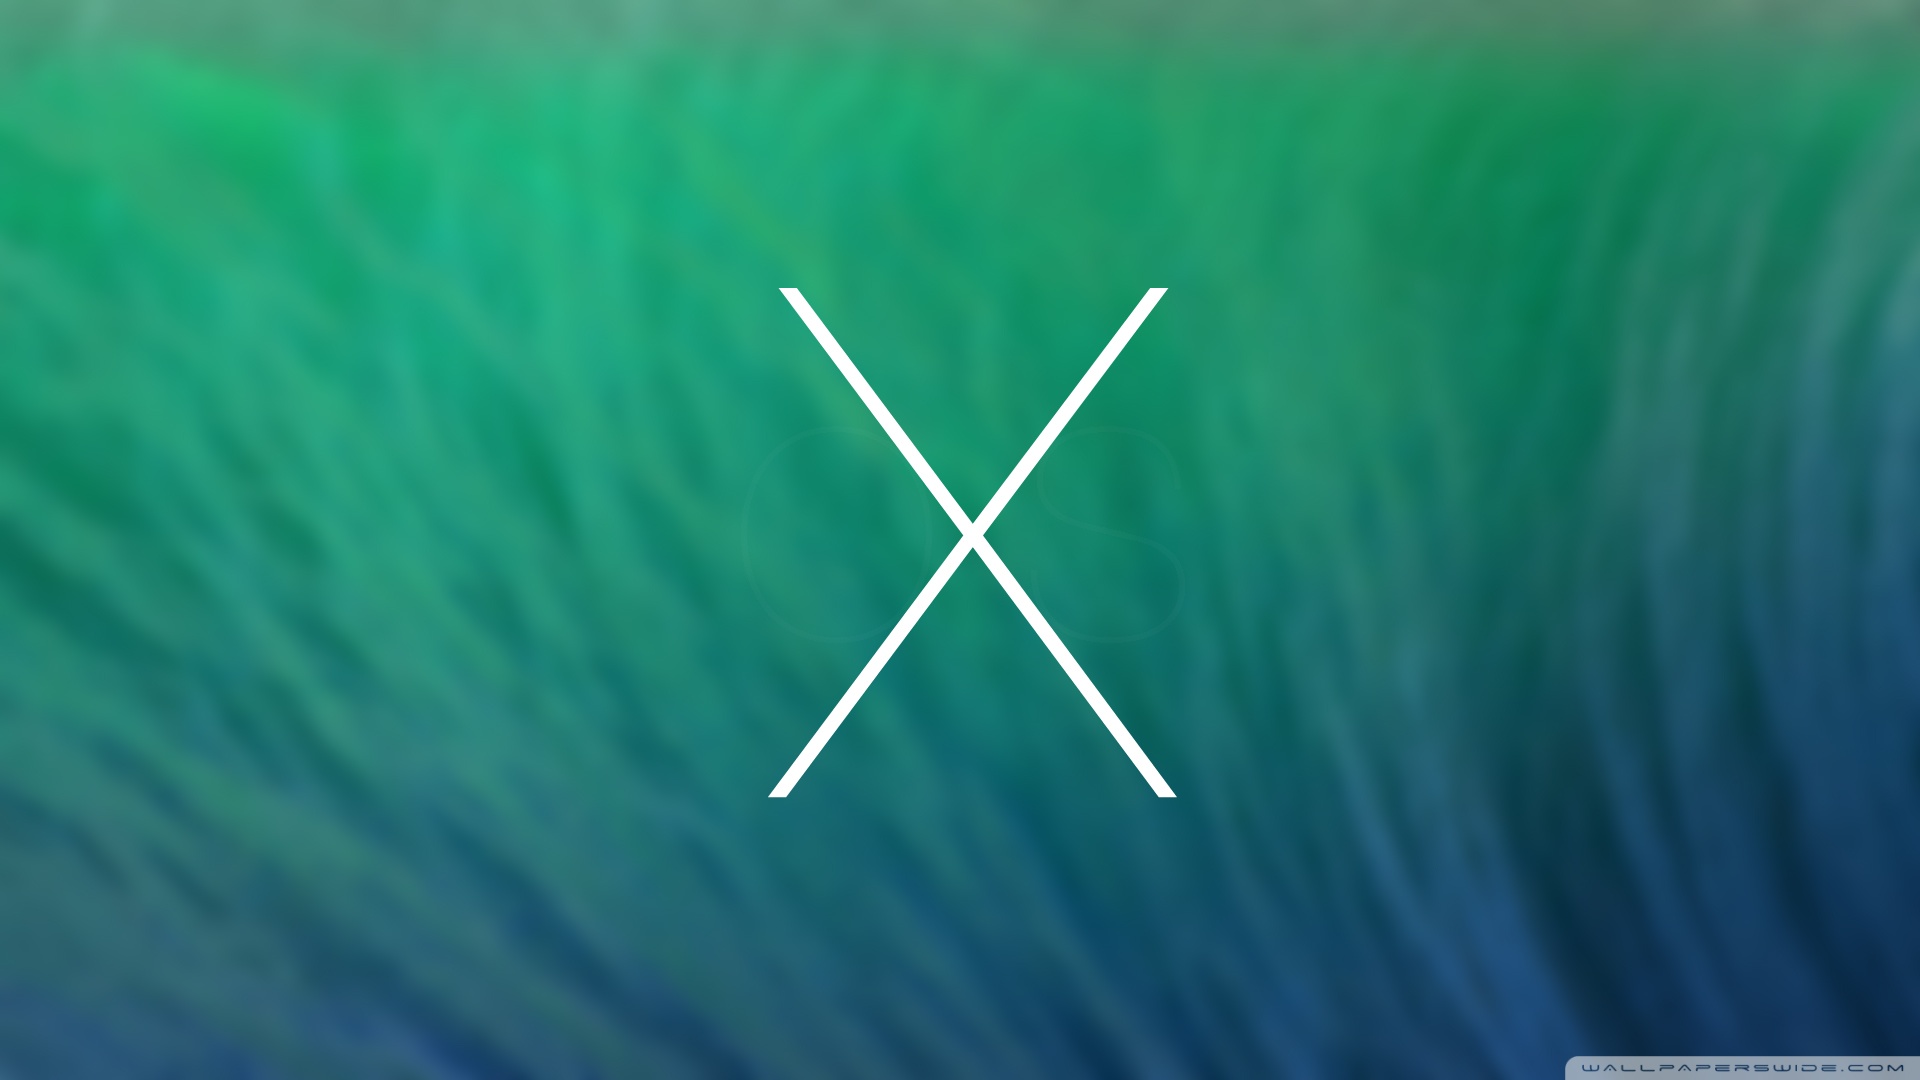 OS X Mavericks Wallpaper - Bing images